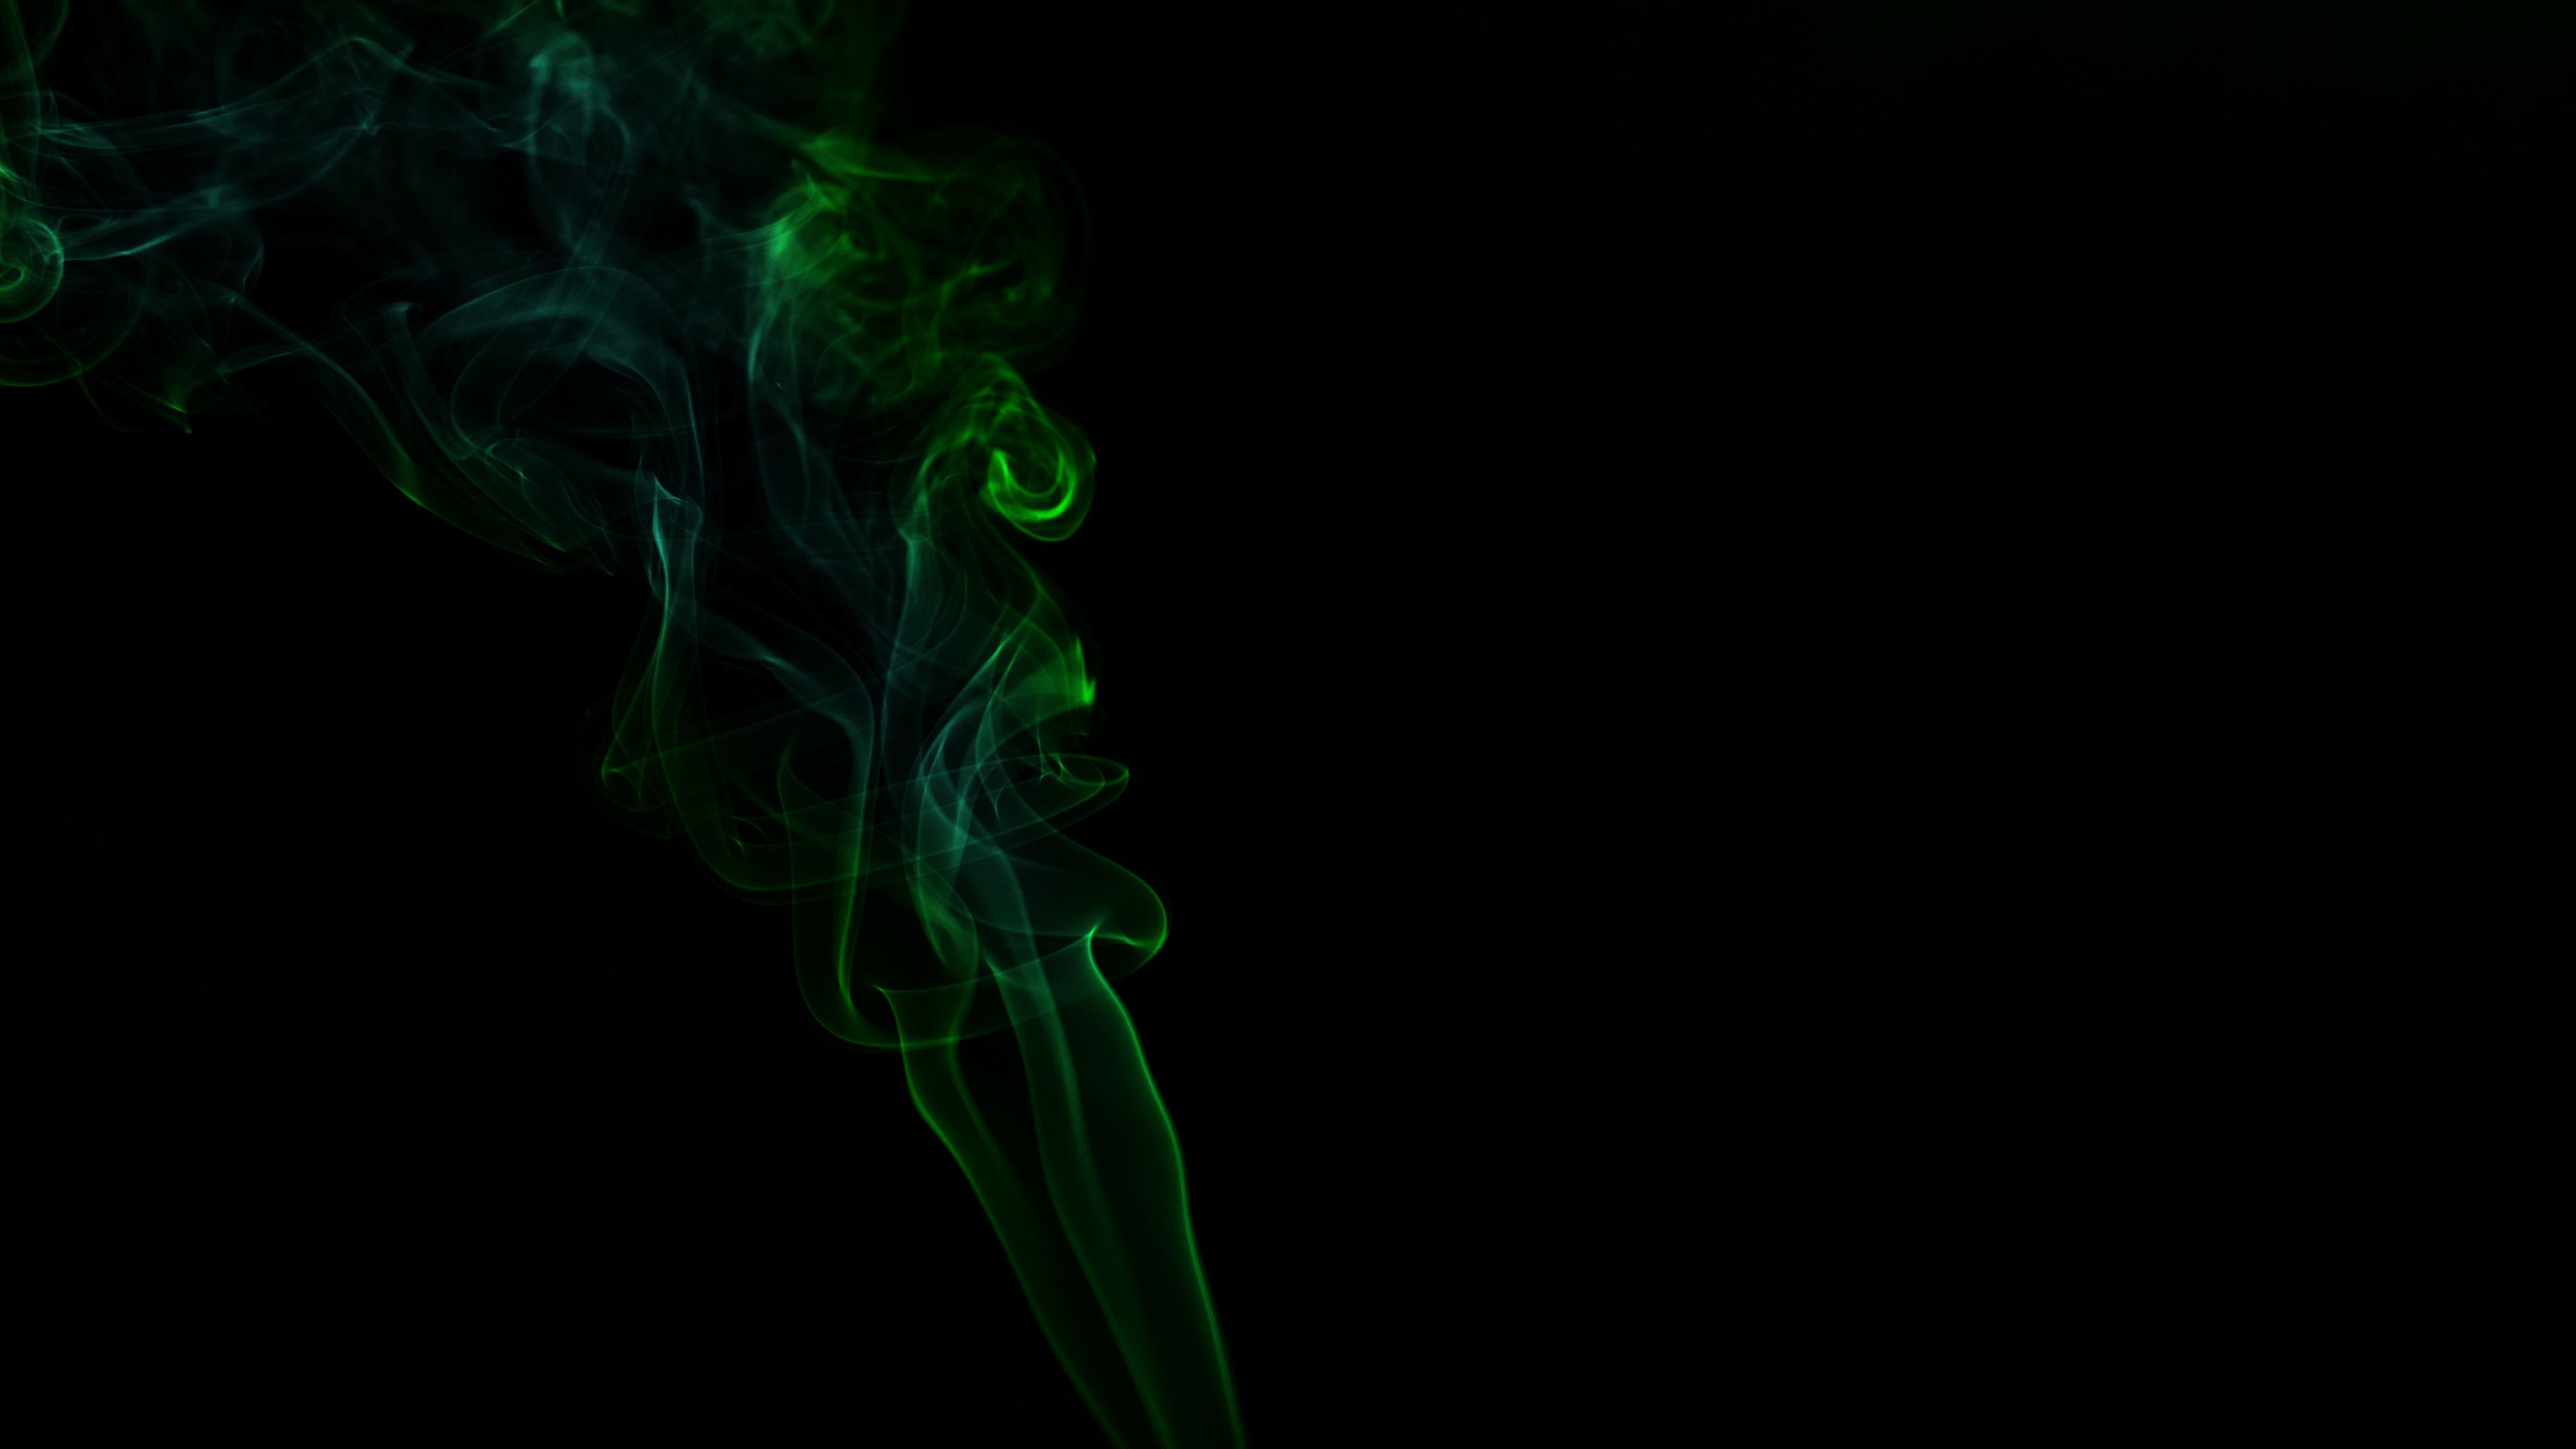 Download wallpaper 3840x2160 smoke, green, dark 4k uhd 16:9 hd background